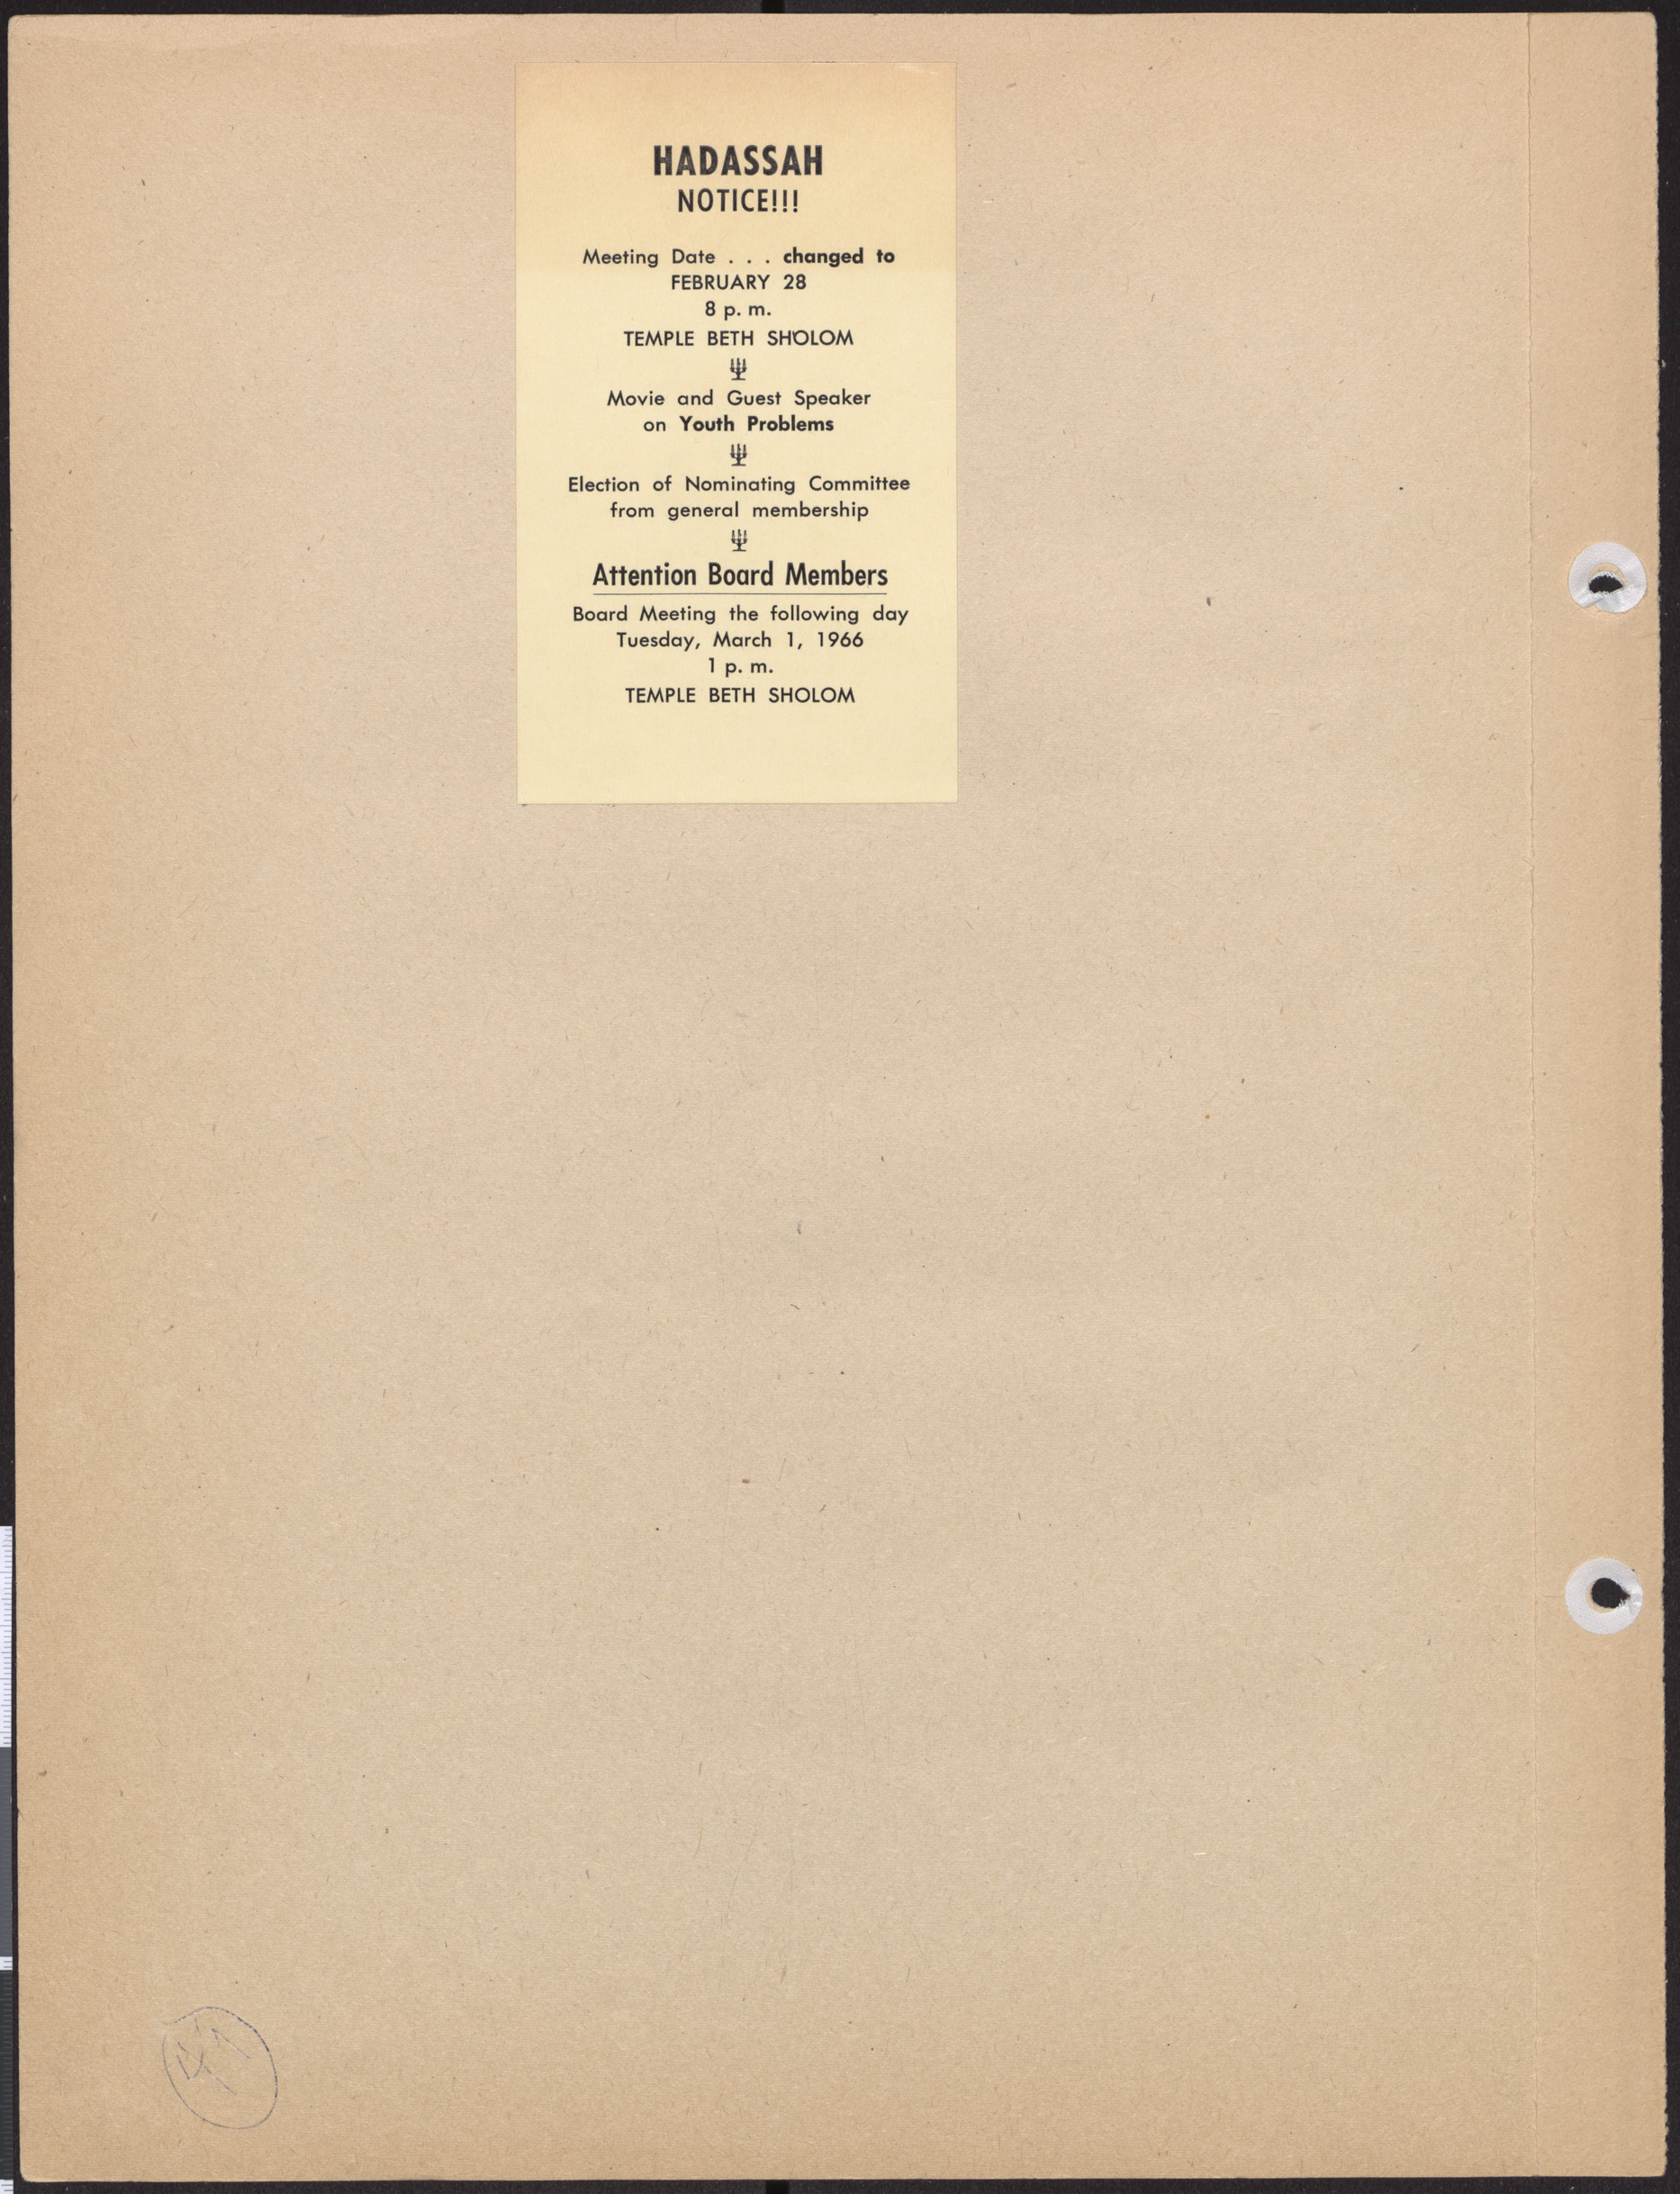 Hadassah meeting notice, February 28, 1966